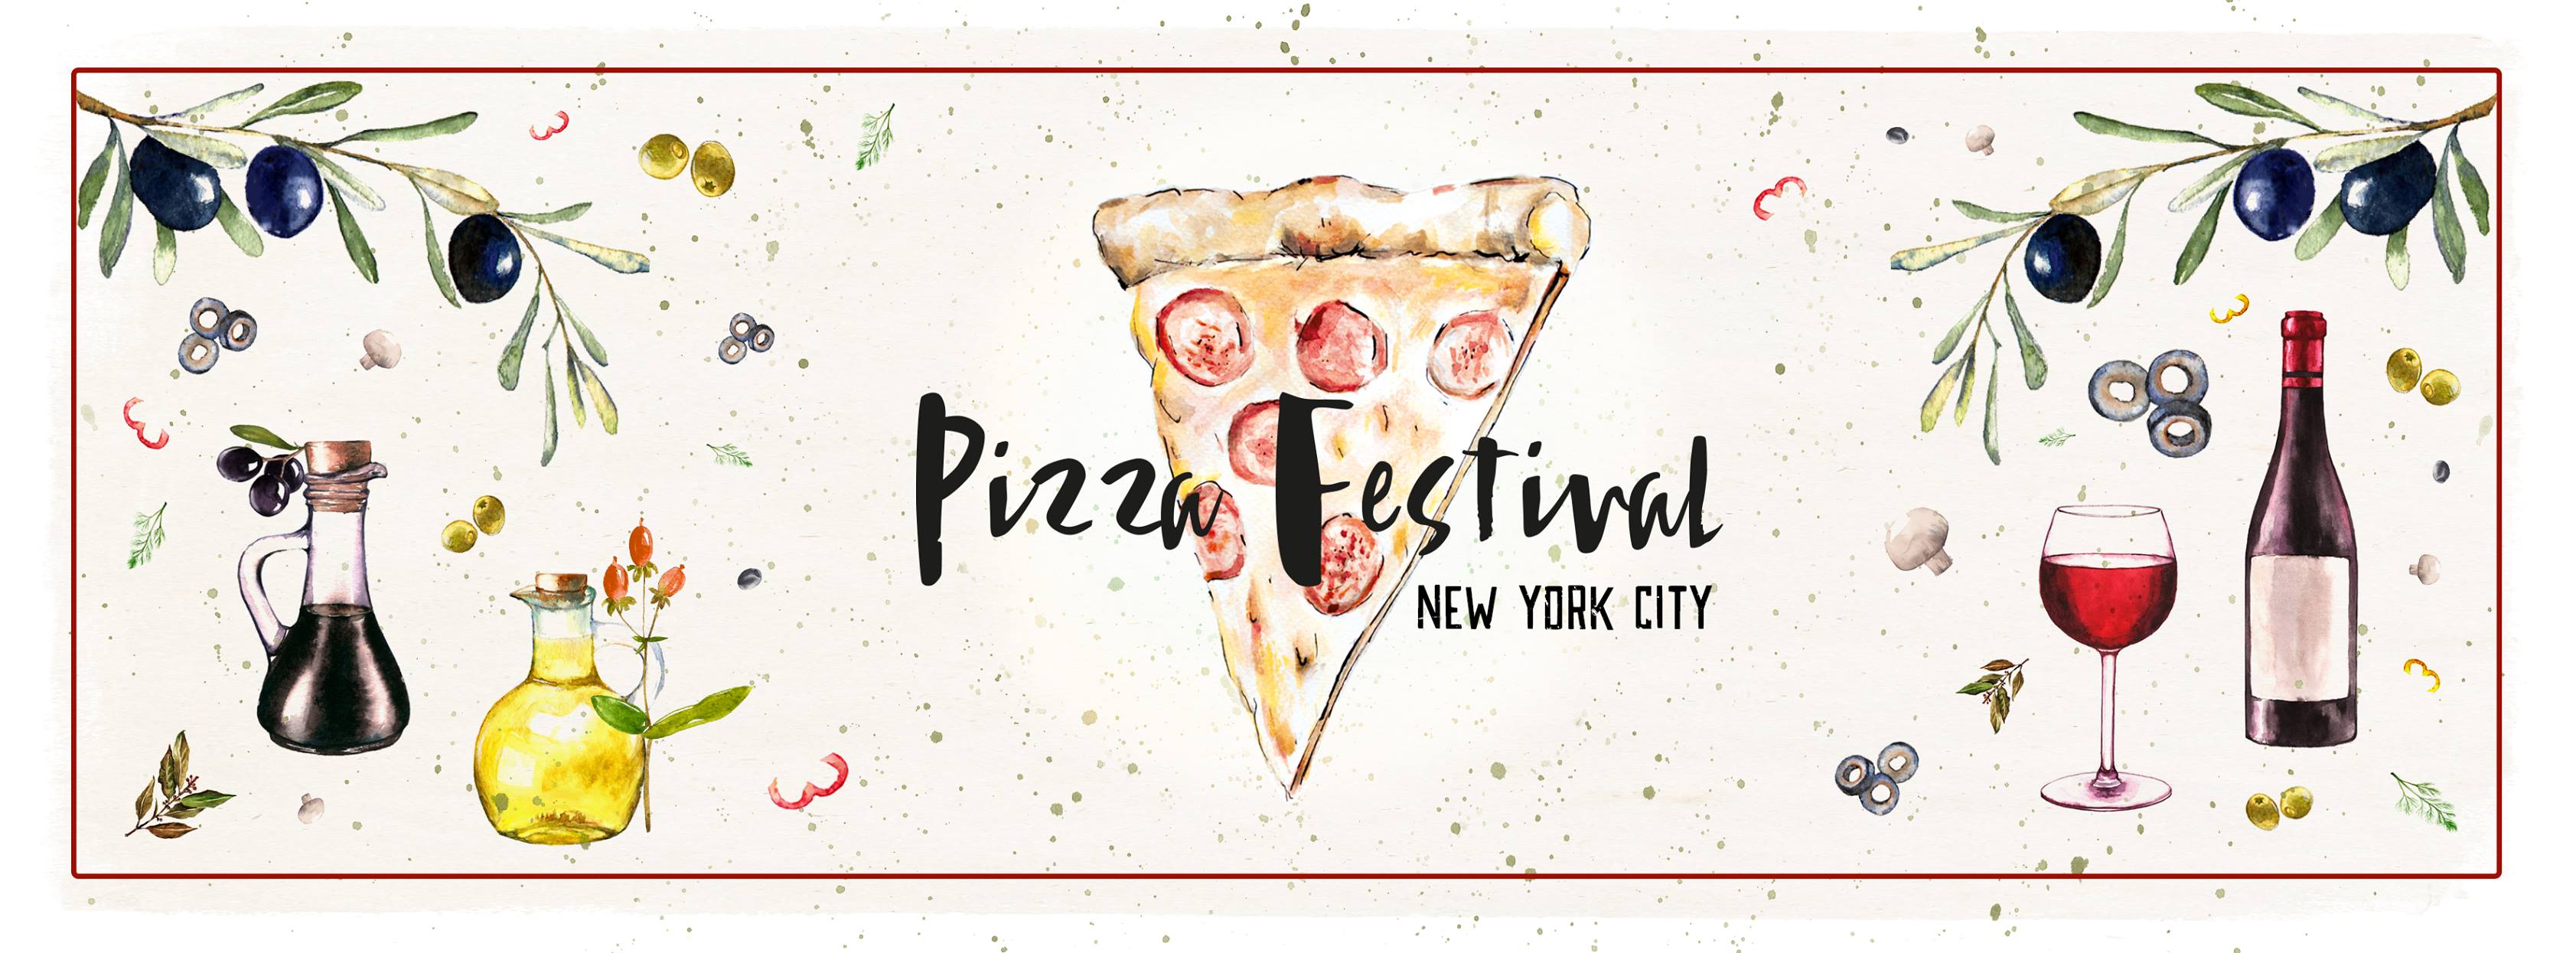 New York City Pizza Festival 2017